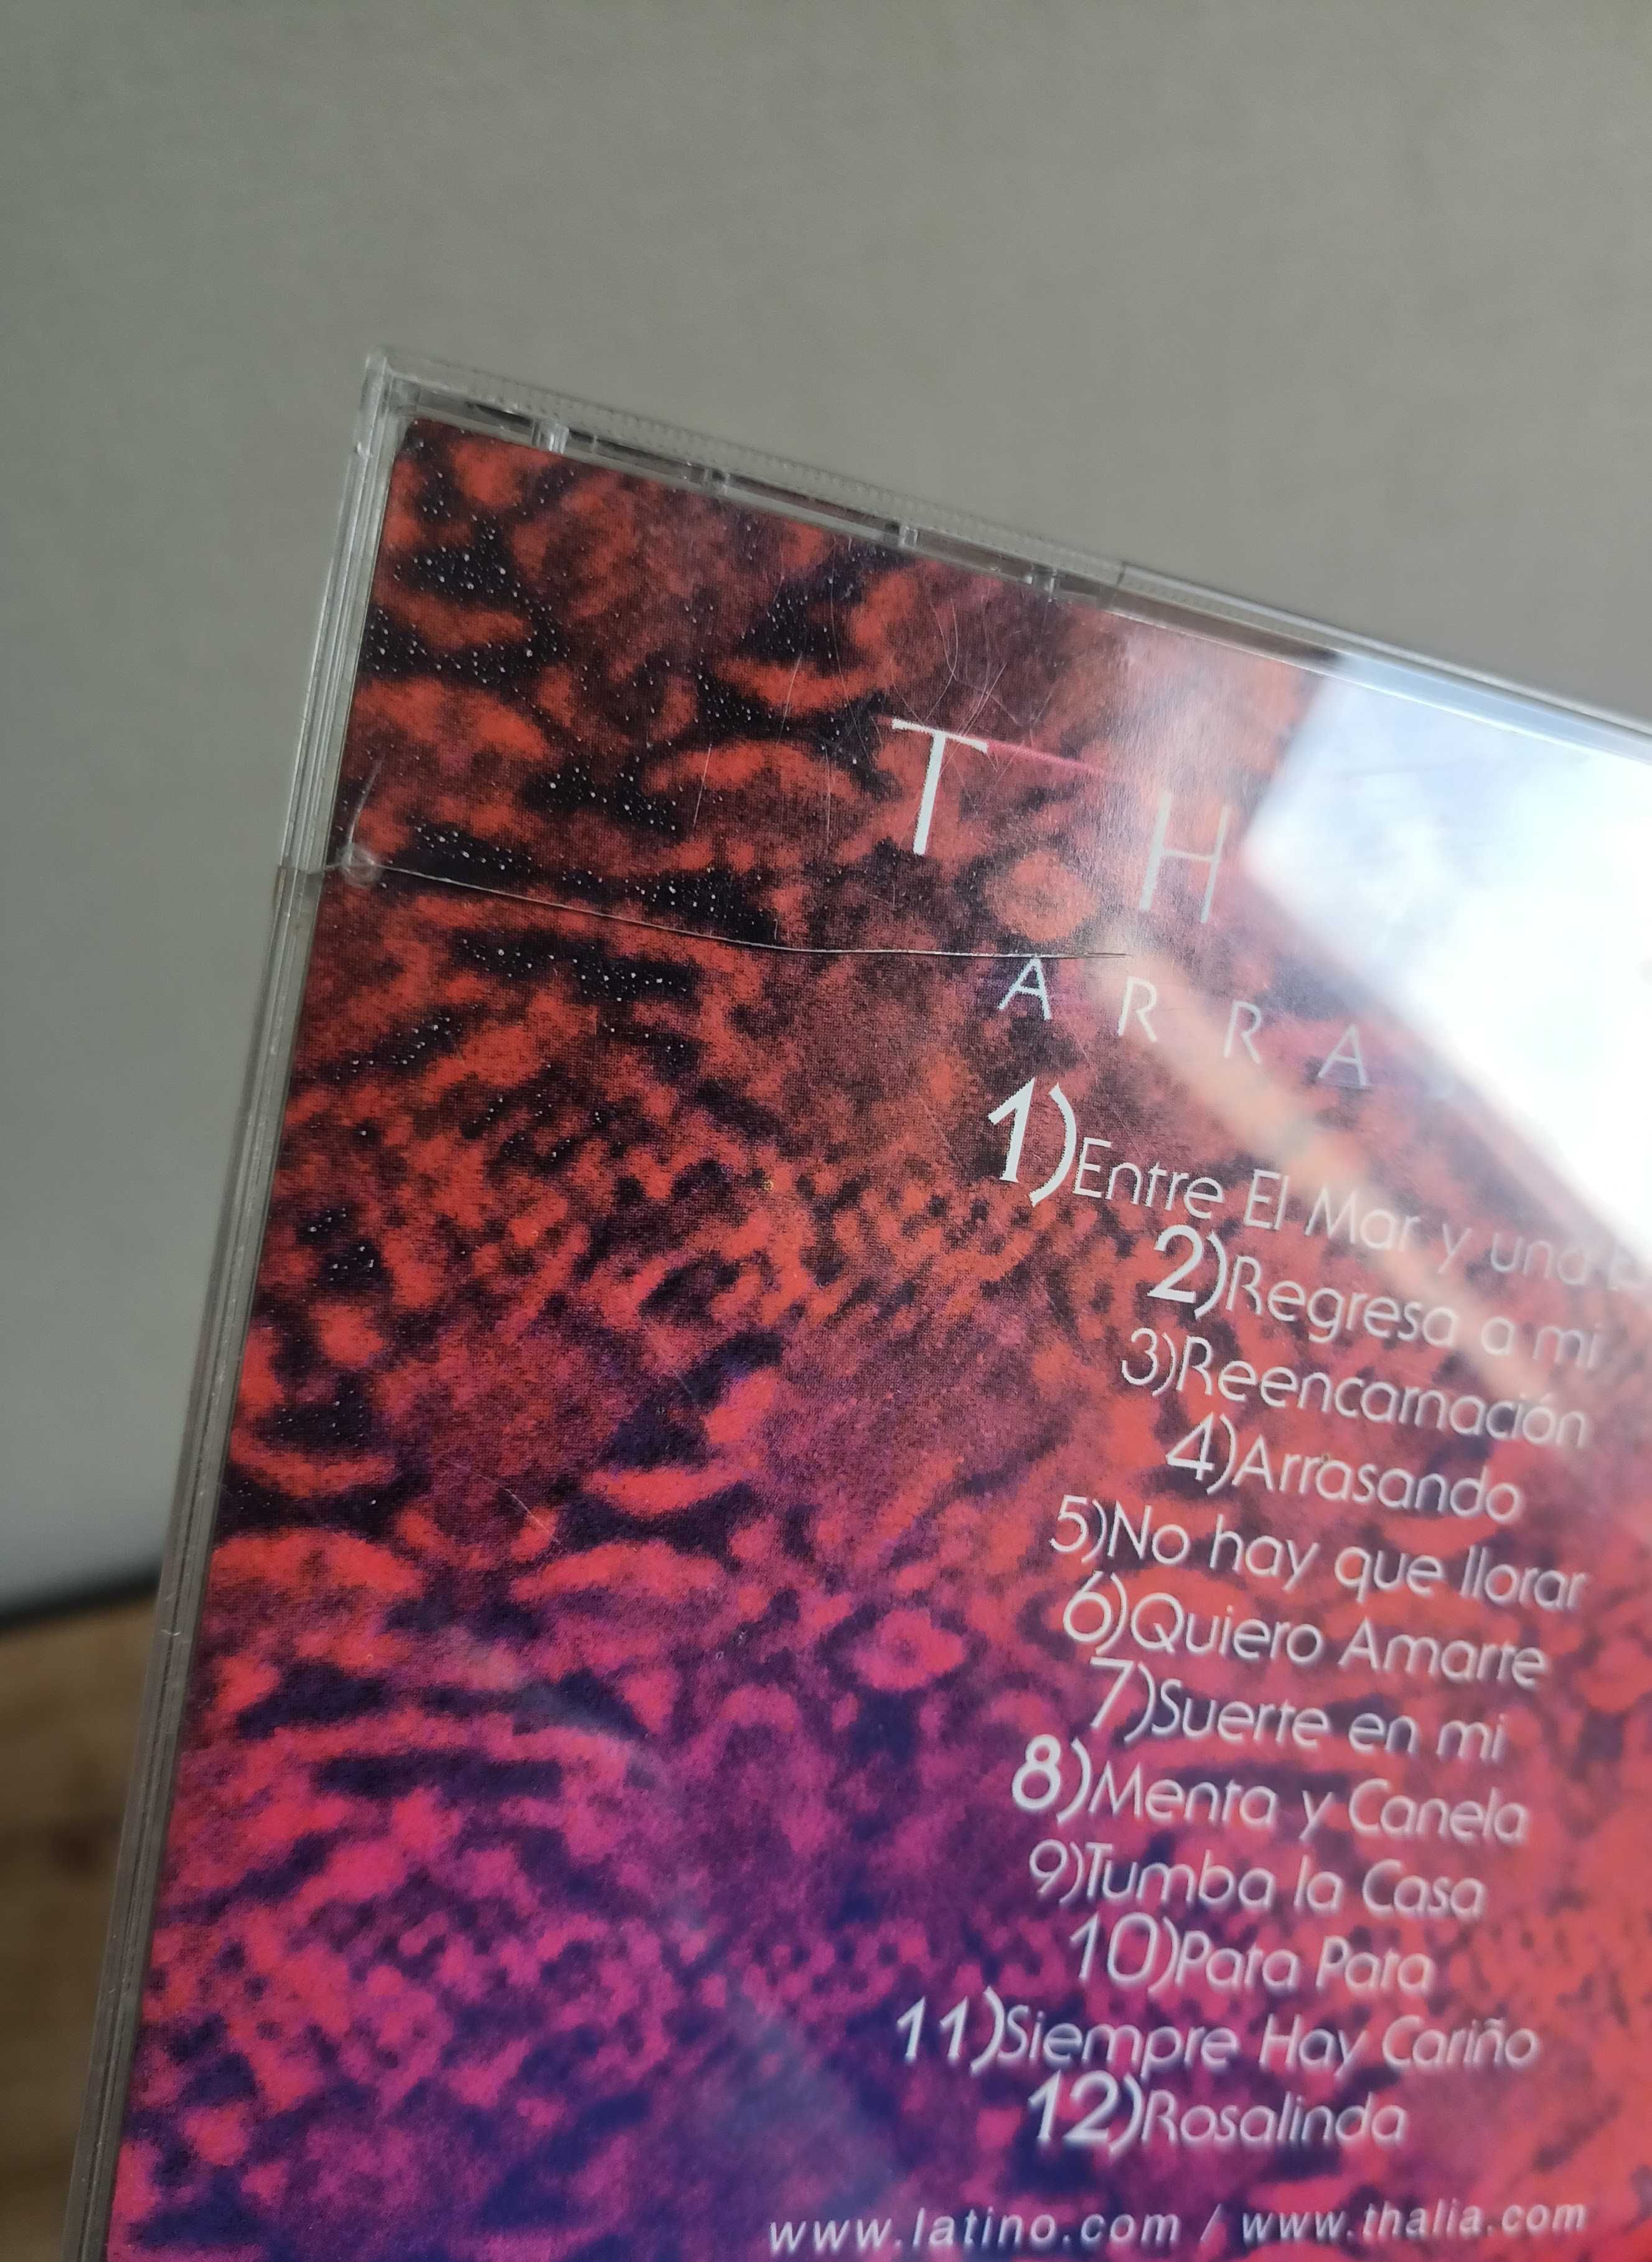 Thalia - Arrasando (2000) cd